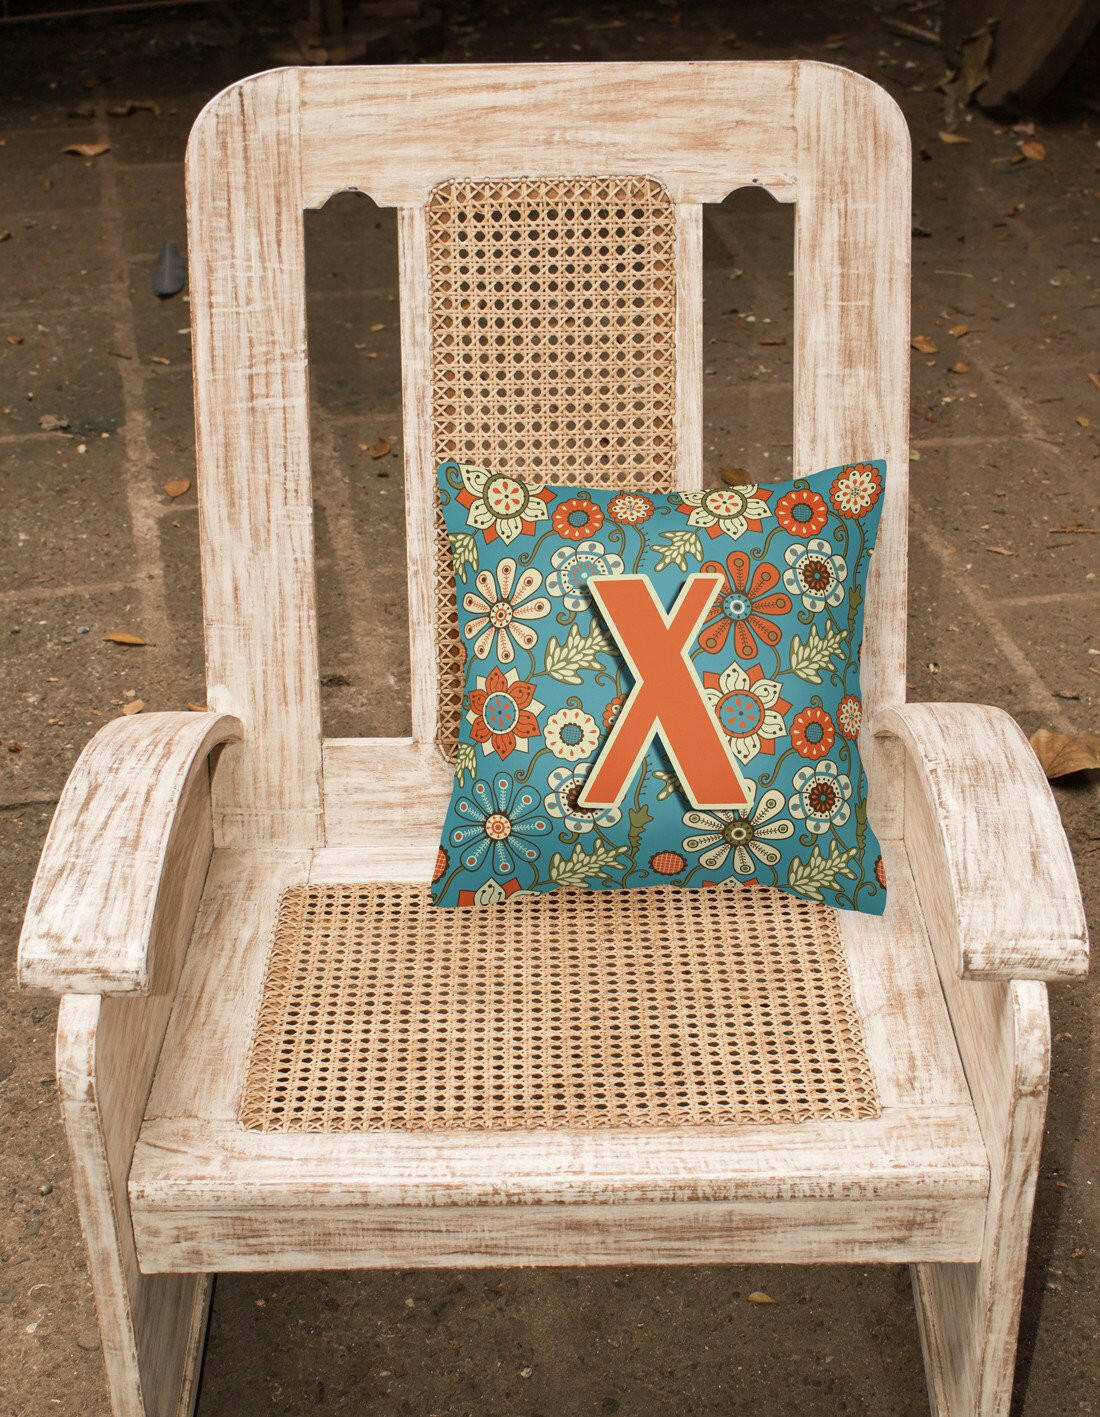 Letter X Flowers Retro Blue Canvas Fabric Decorative Pillow CJ2012-XPW1414 by Caroline's Treasures